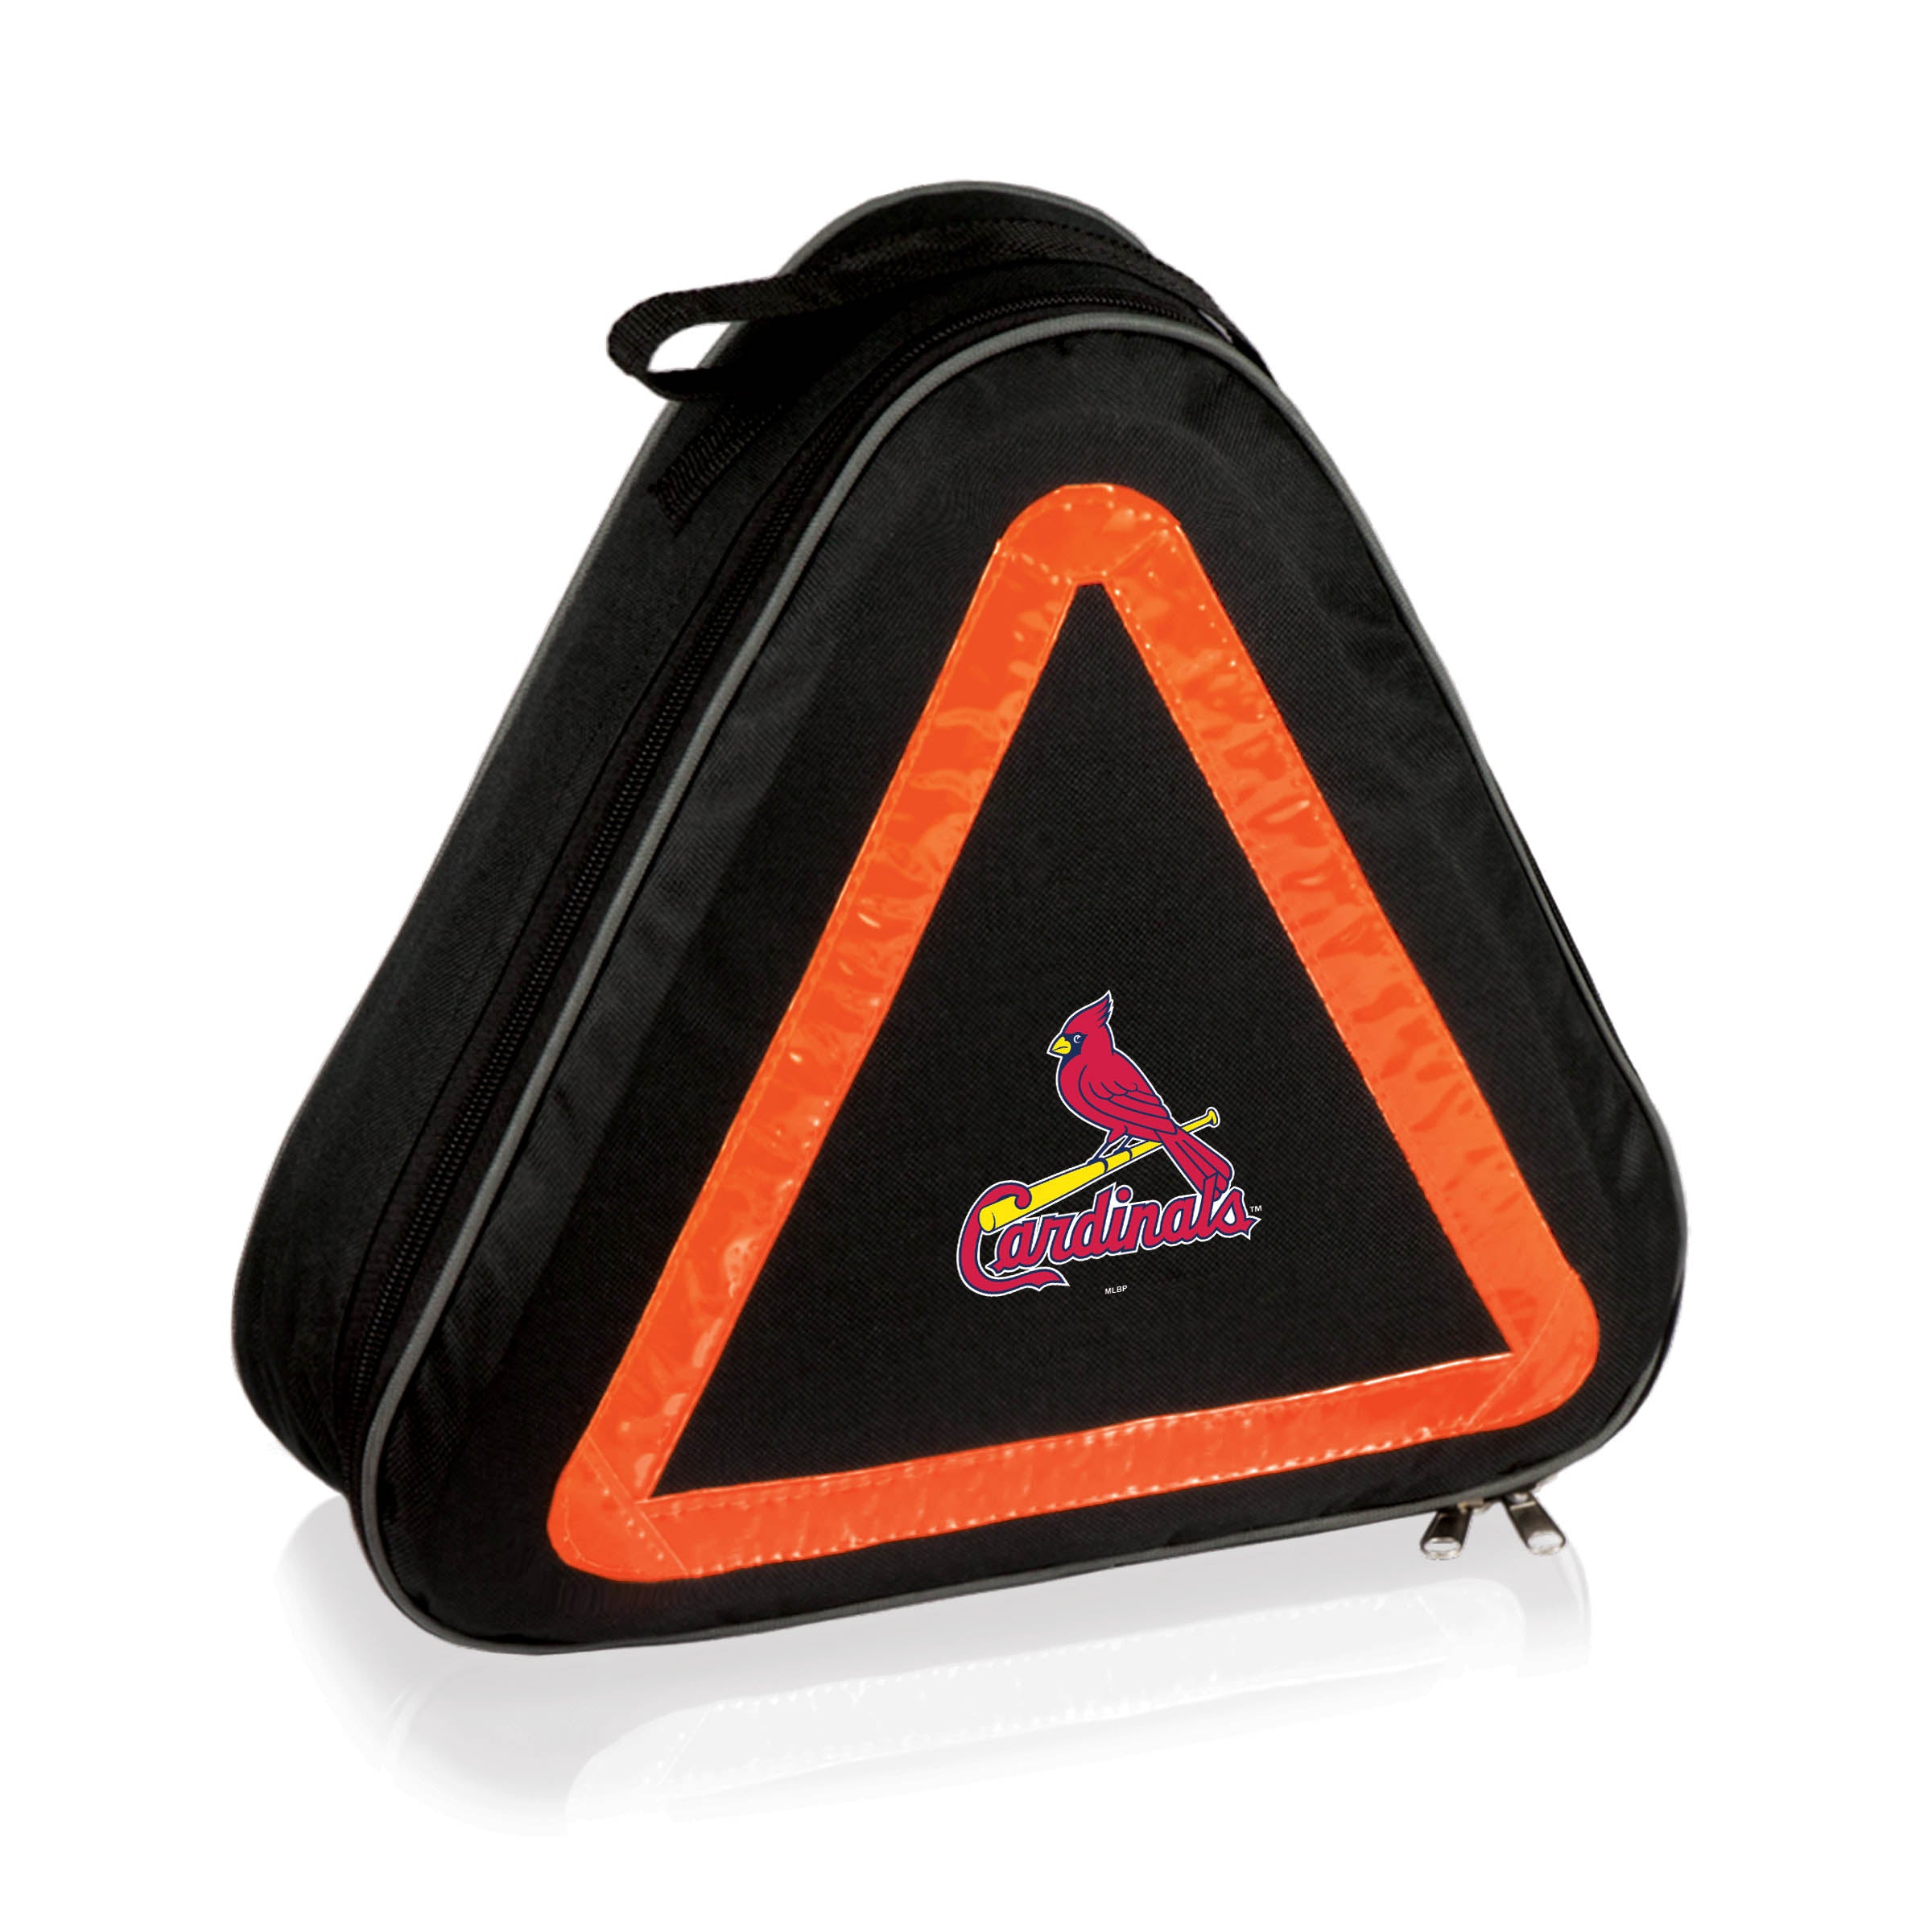 St. Louis Cardinals - Roadside Emergency Car Kit